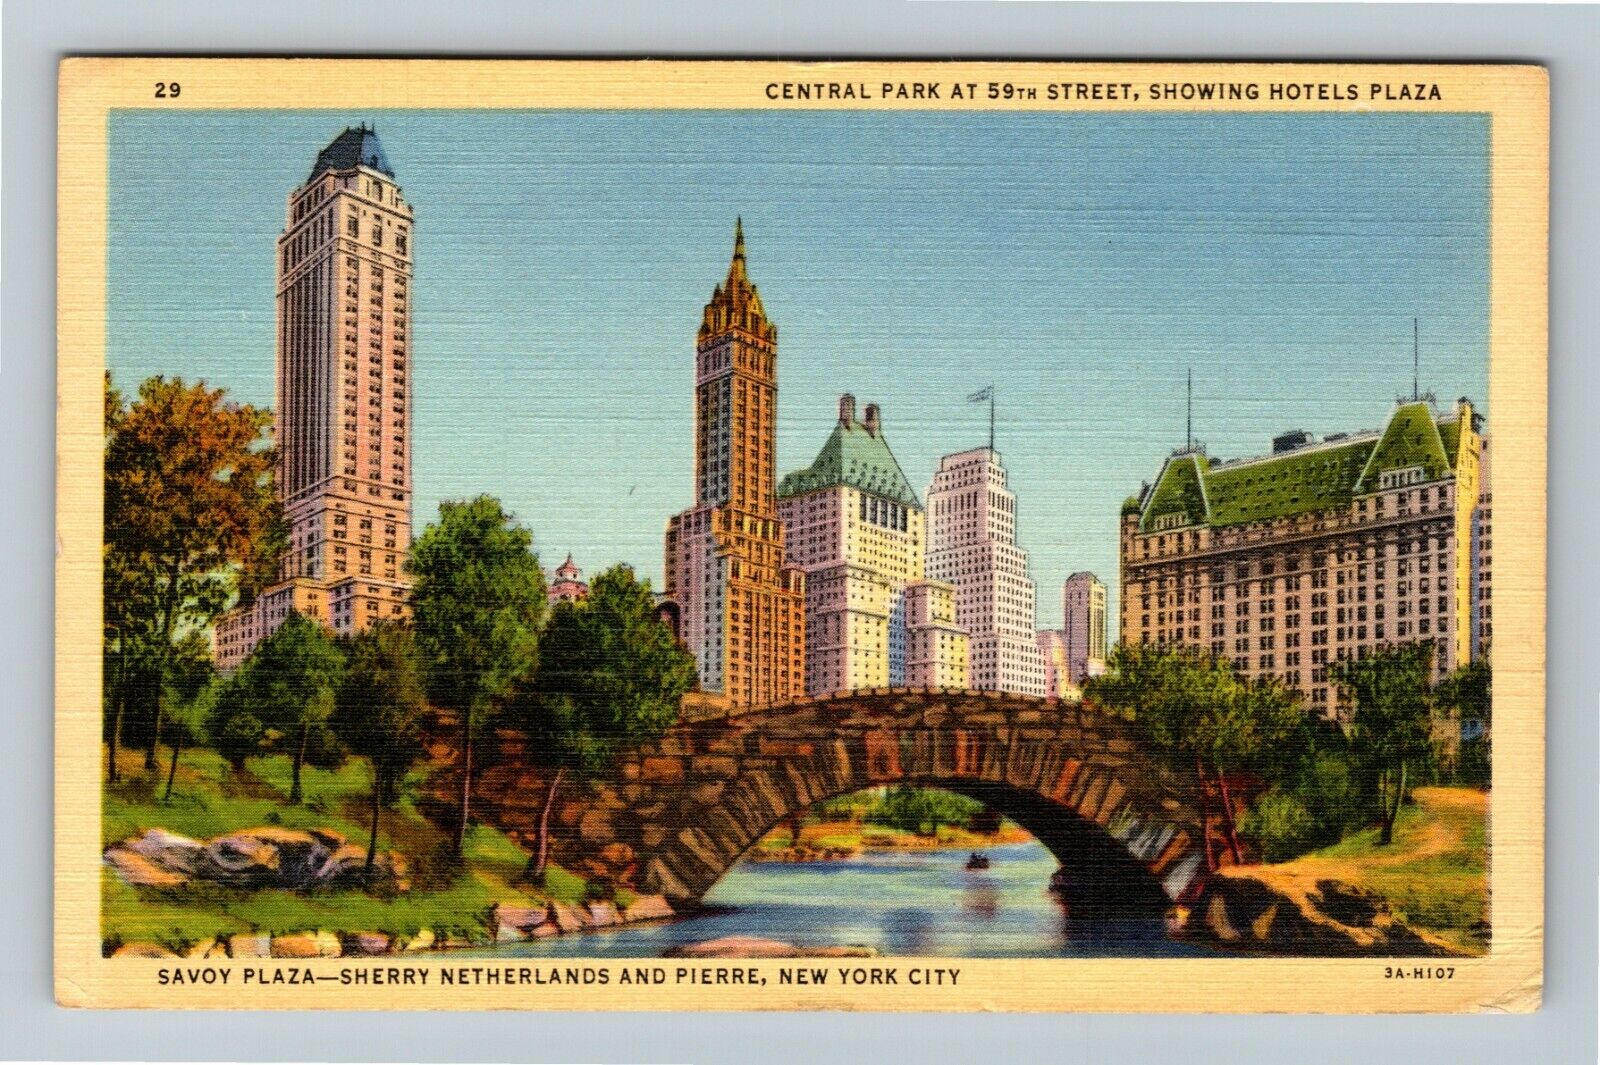 New York City NY Central Park Bridge Hotel Plaza c1942 Vintage Postcard